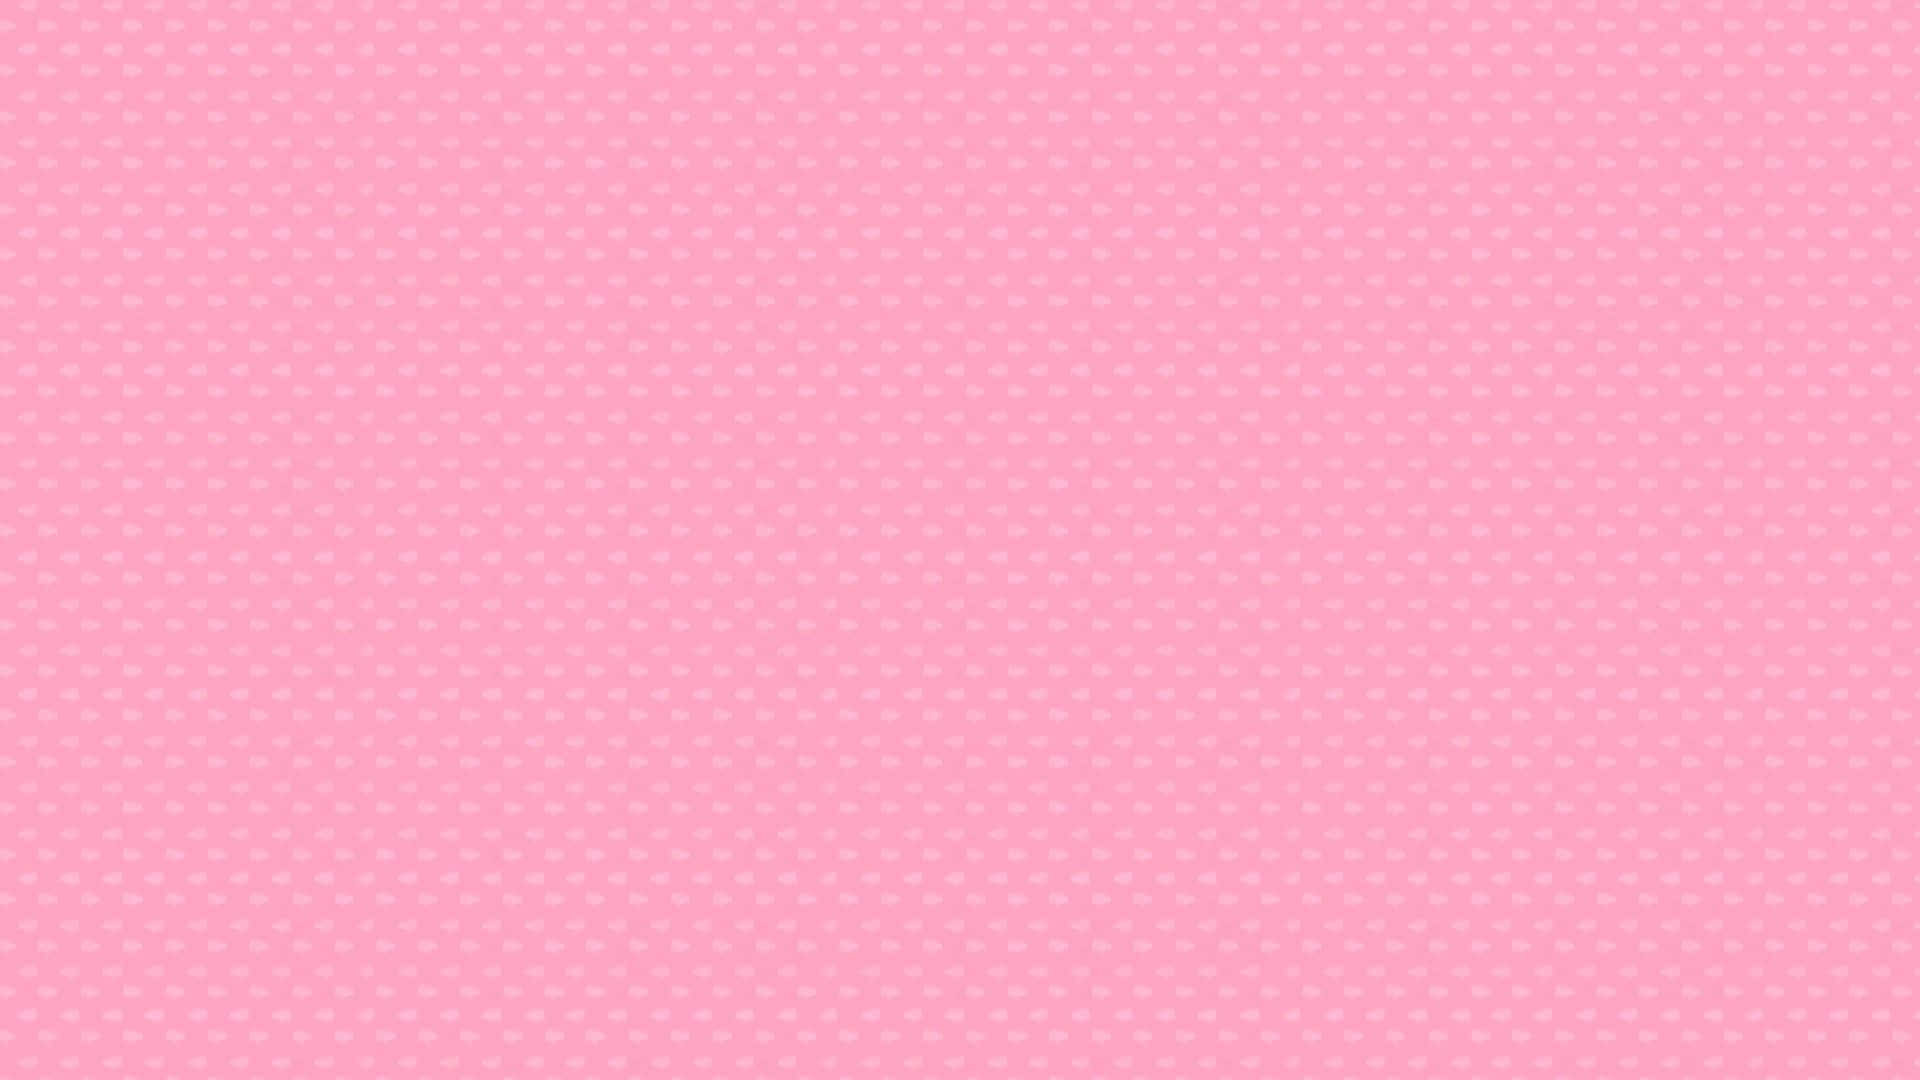 A Pink Polka Dot Background Wallpaper